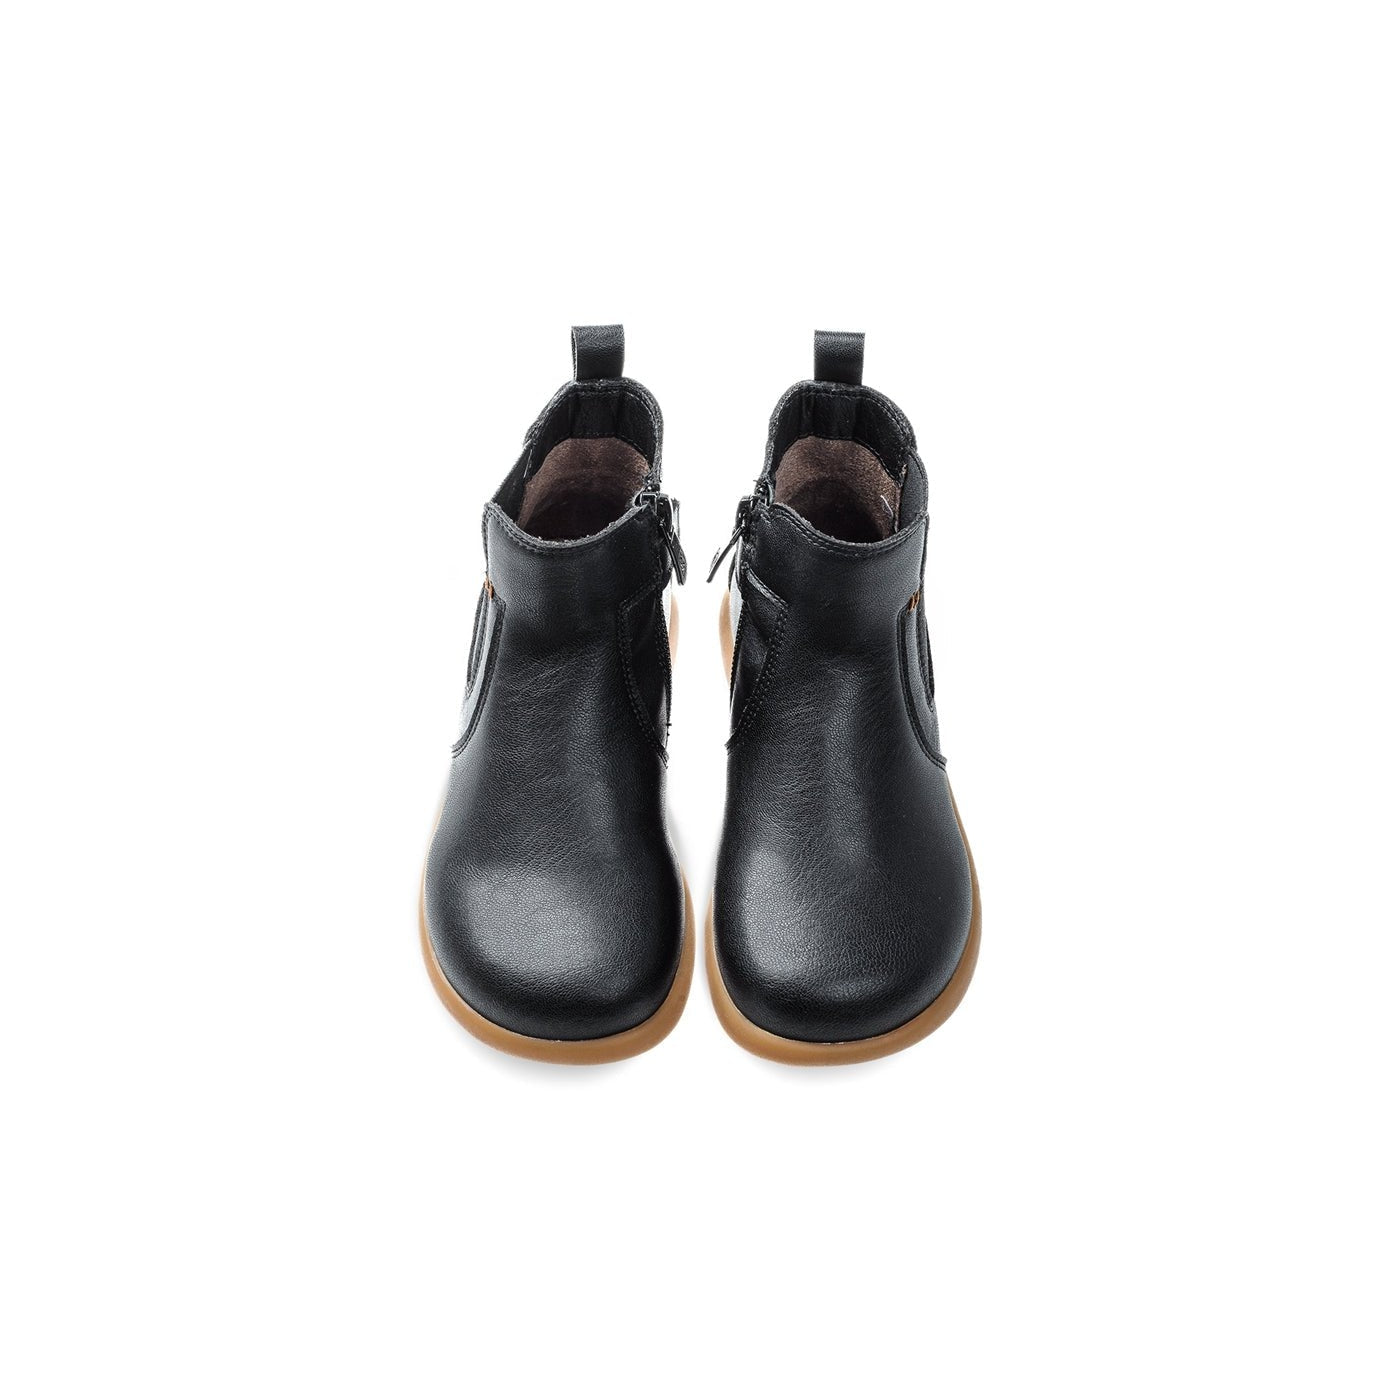 Brave Explorer Anti-slip Kids Black Chelsea Boots - 0cm